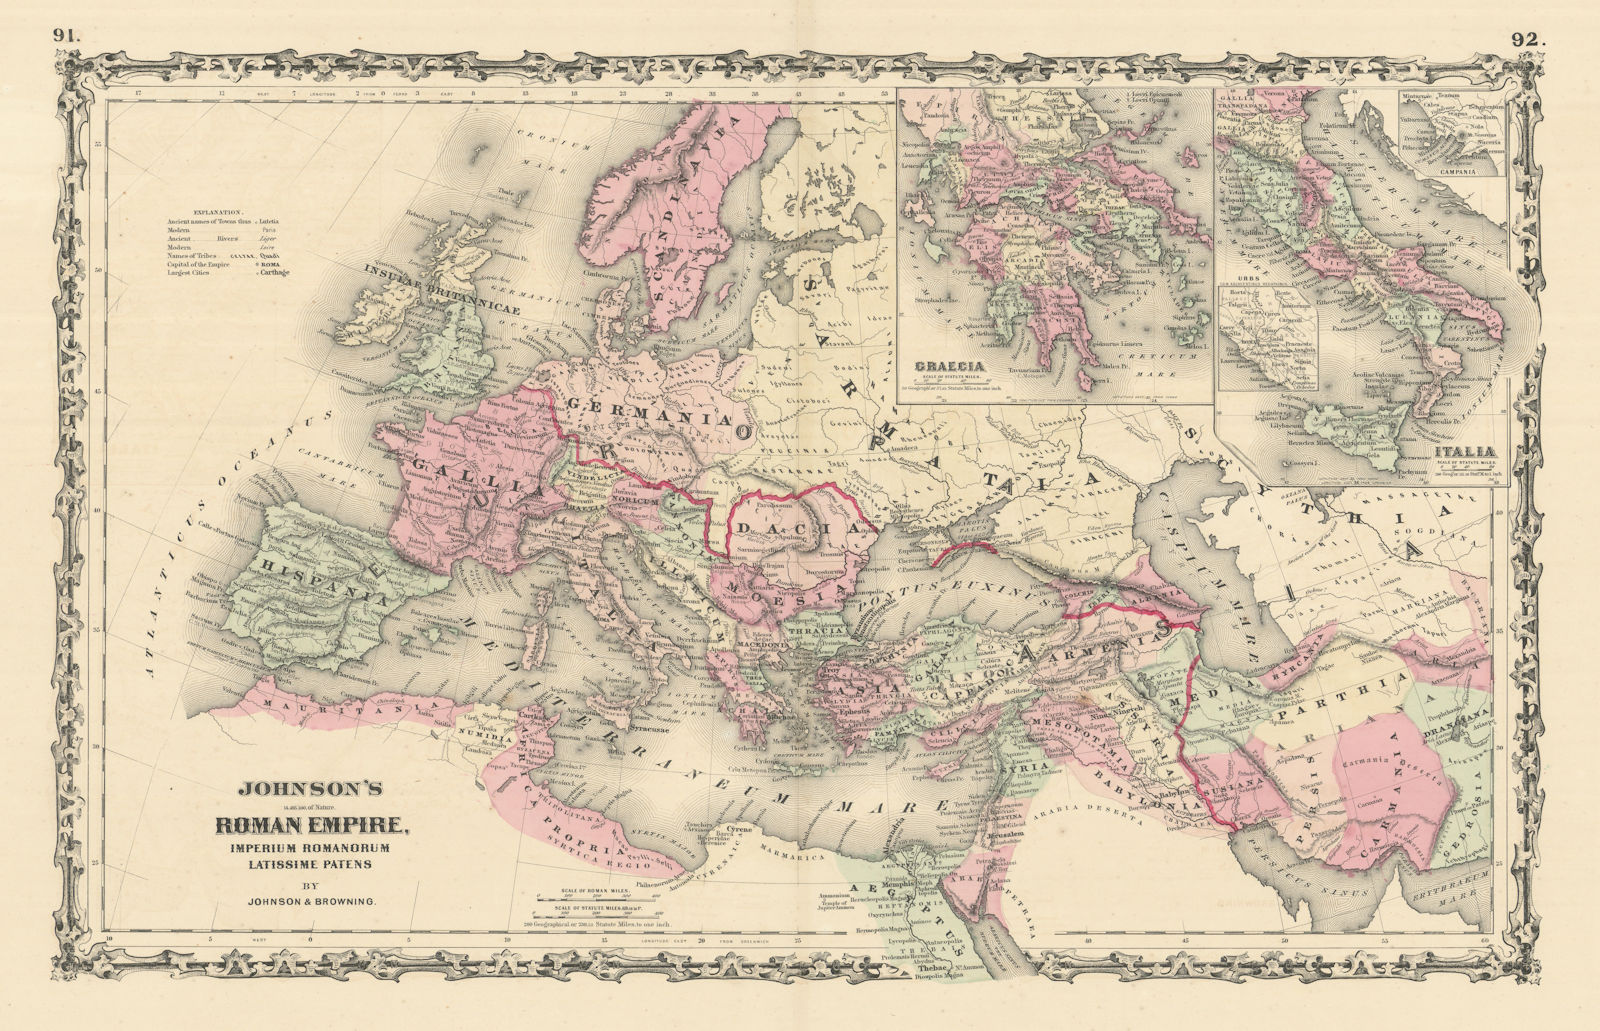 Associate Product Johnson's Roman Empire. Imperium Romanorum. Graecia Italia Greece Italy 1861 map